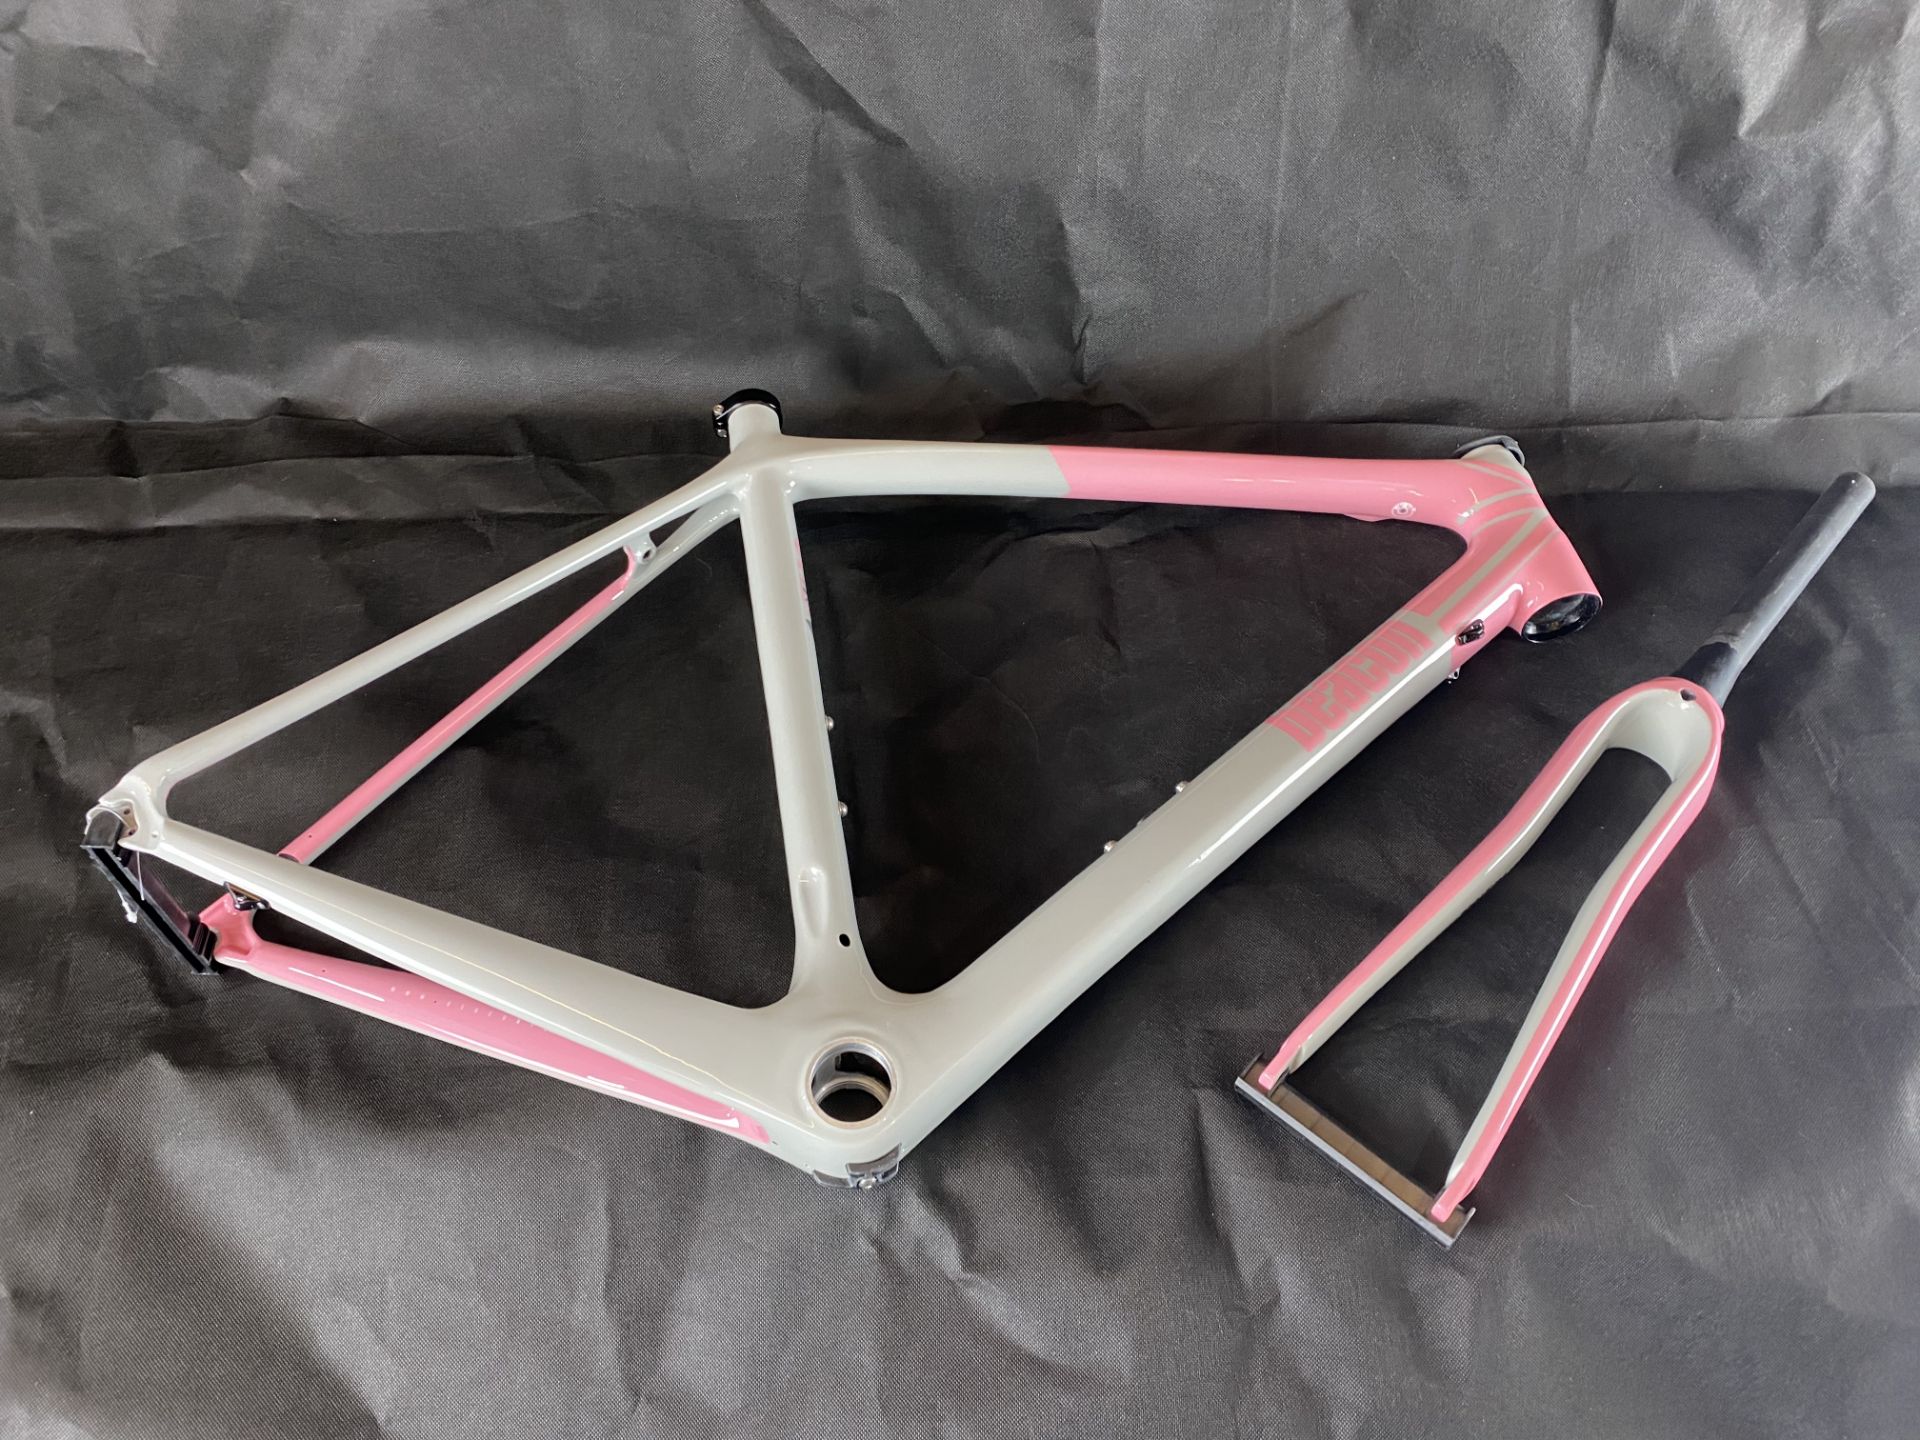 1 x Beacon Model BF-70, Size 520, Carbon Fibre Bike Frame in Grey & Pink.